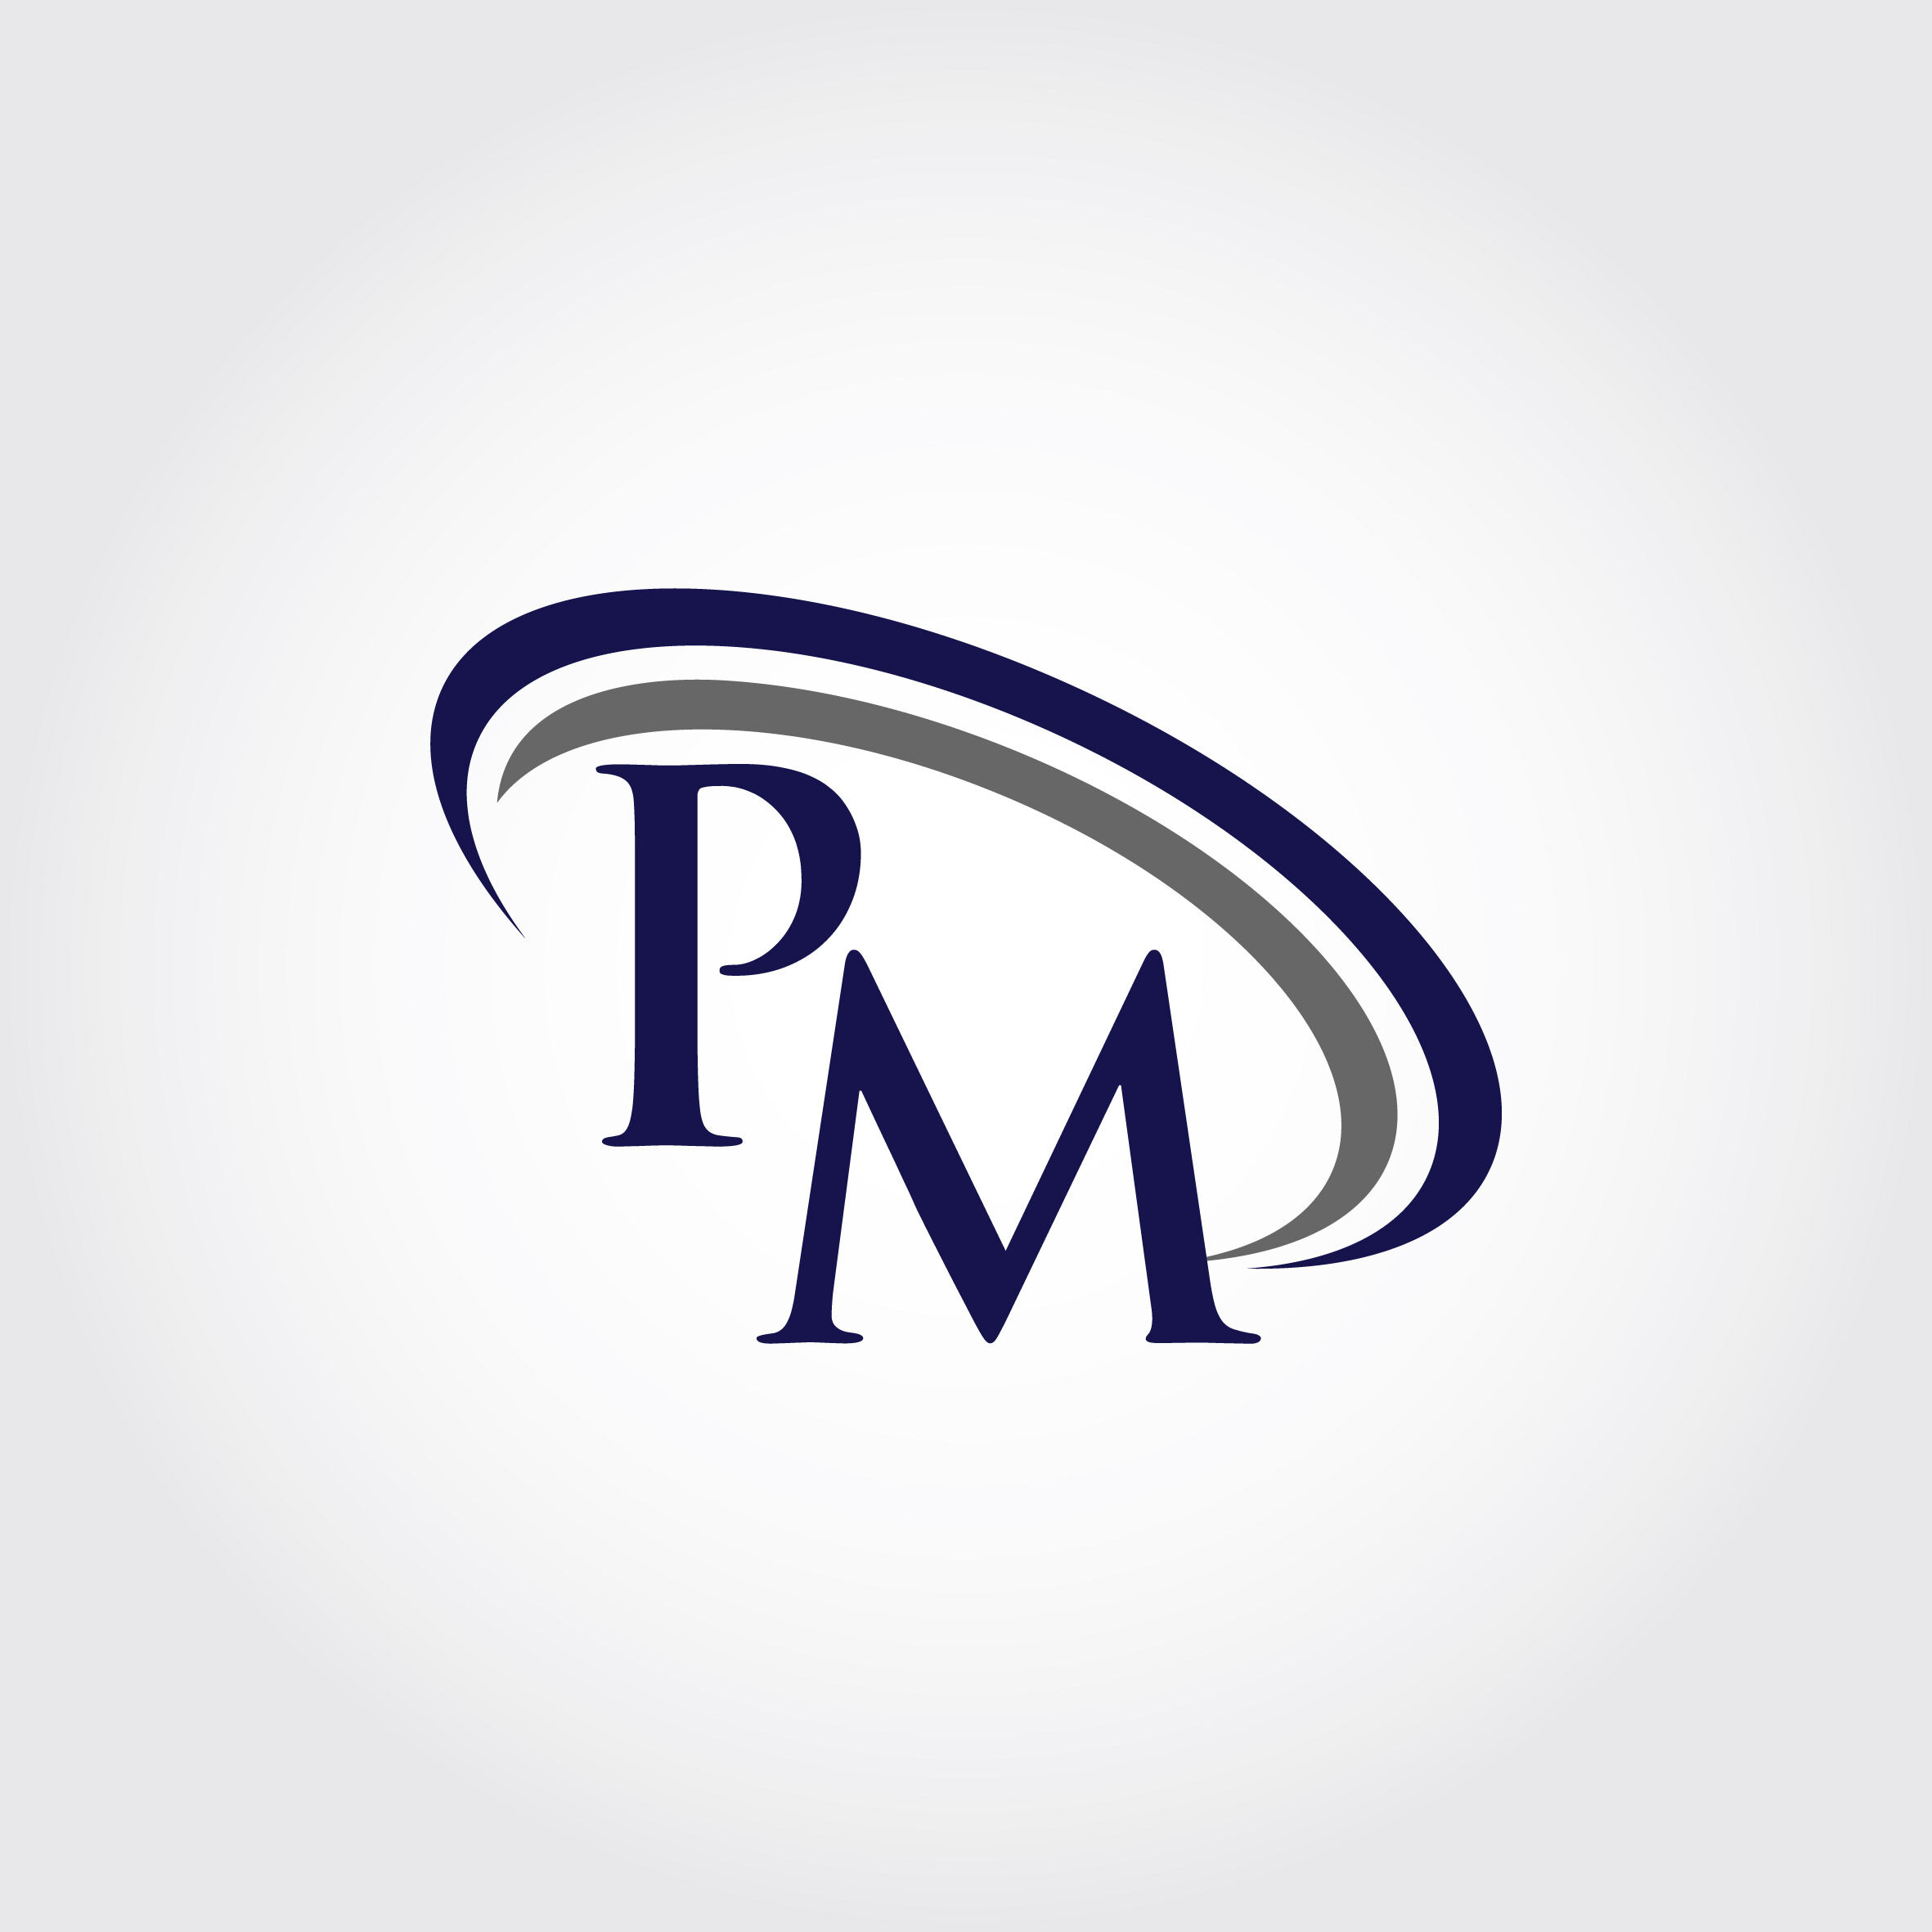 MOnogram PM Logo Design By Vectorseller